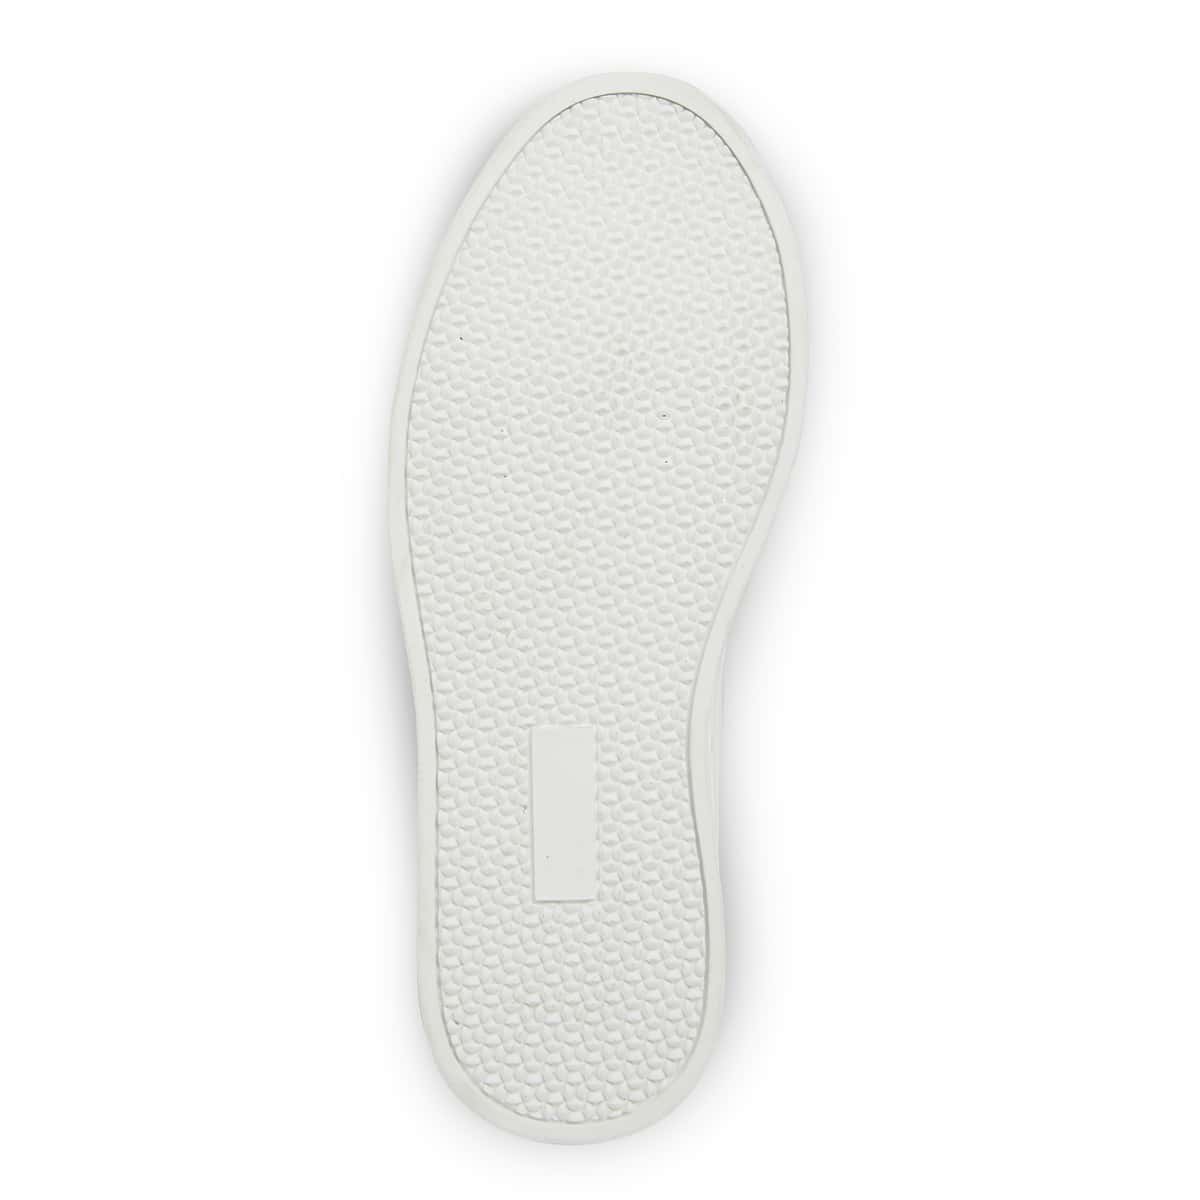 Ultra Sneaker in White Glitter Leather